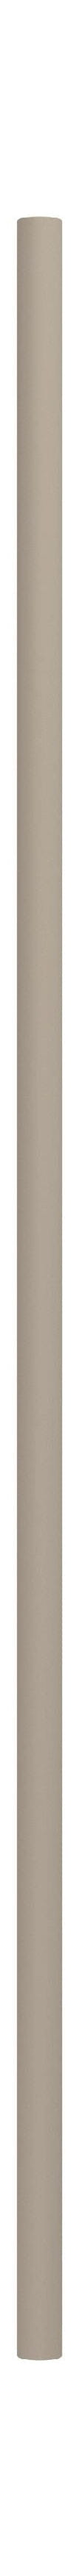 Moebe Shelving System/Wall Shelving Leg 85 Cm, Warm Grey